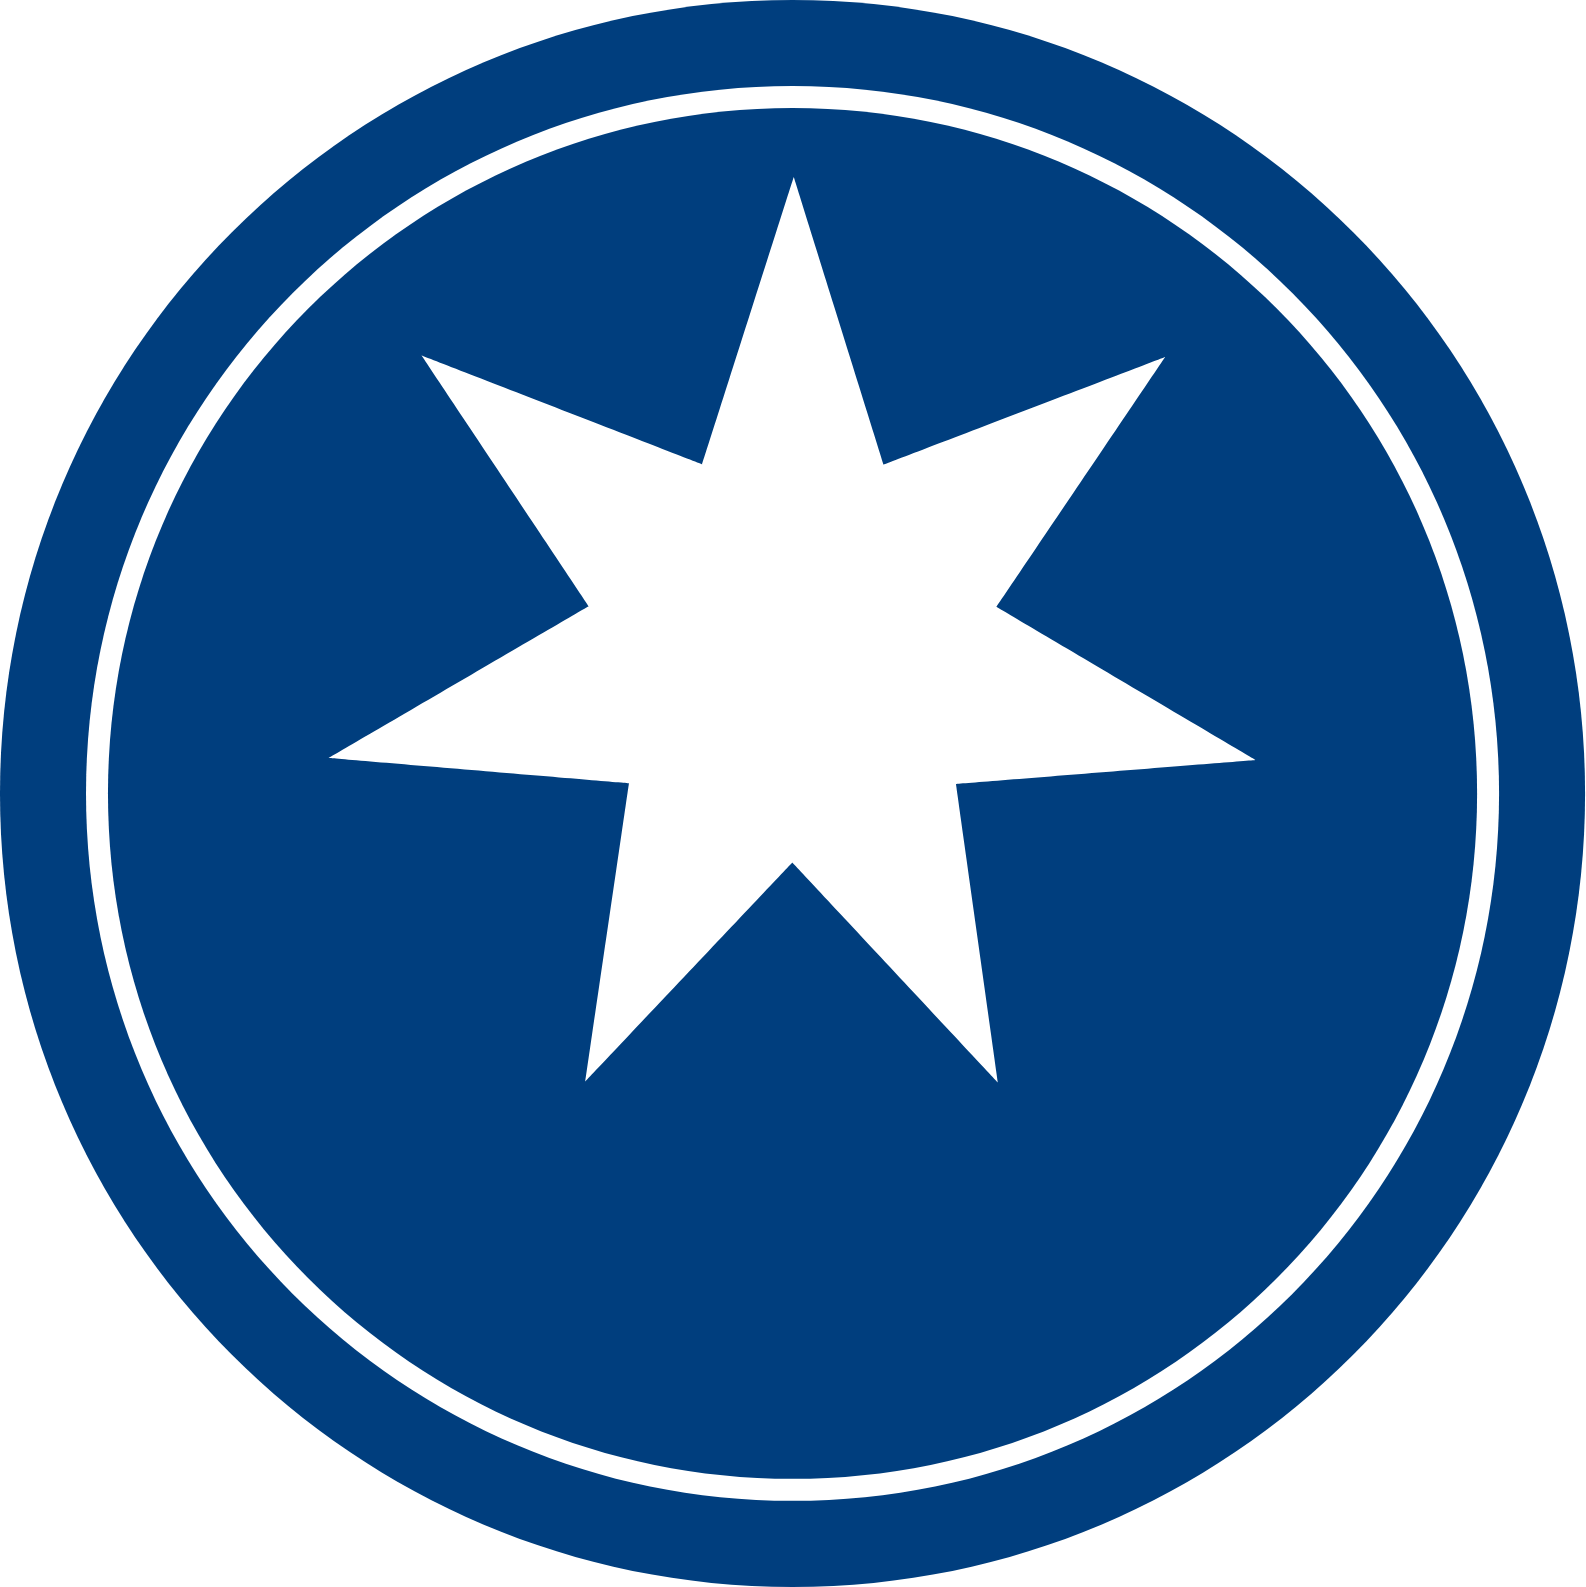 Magellan Financial Group logo (PNG transparent)